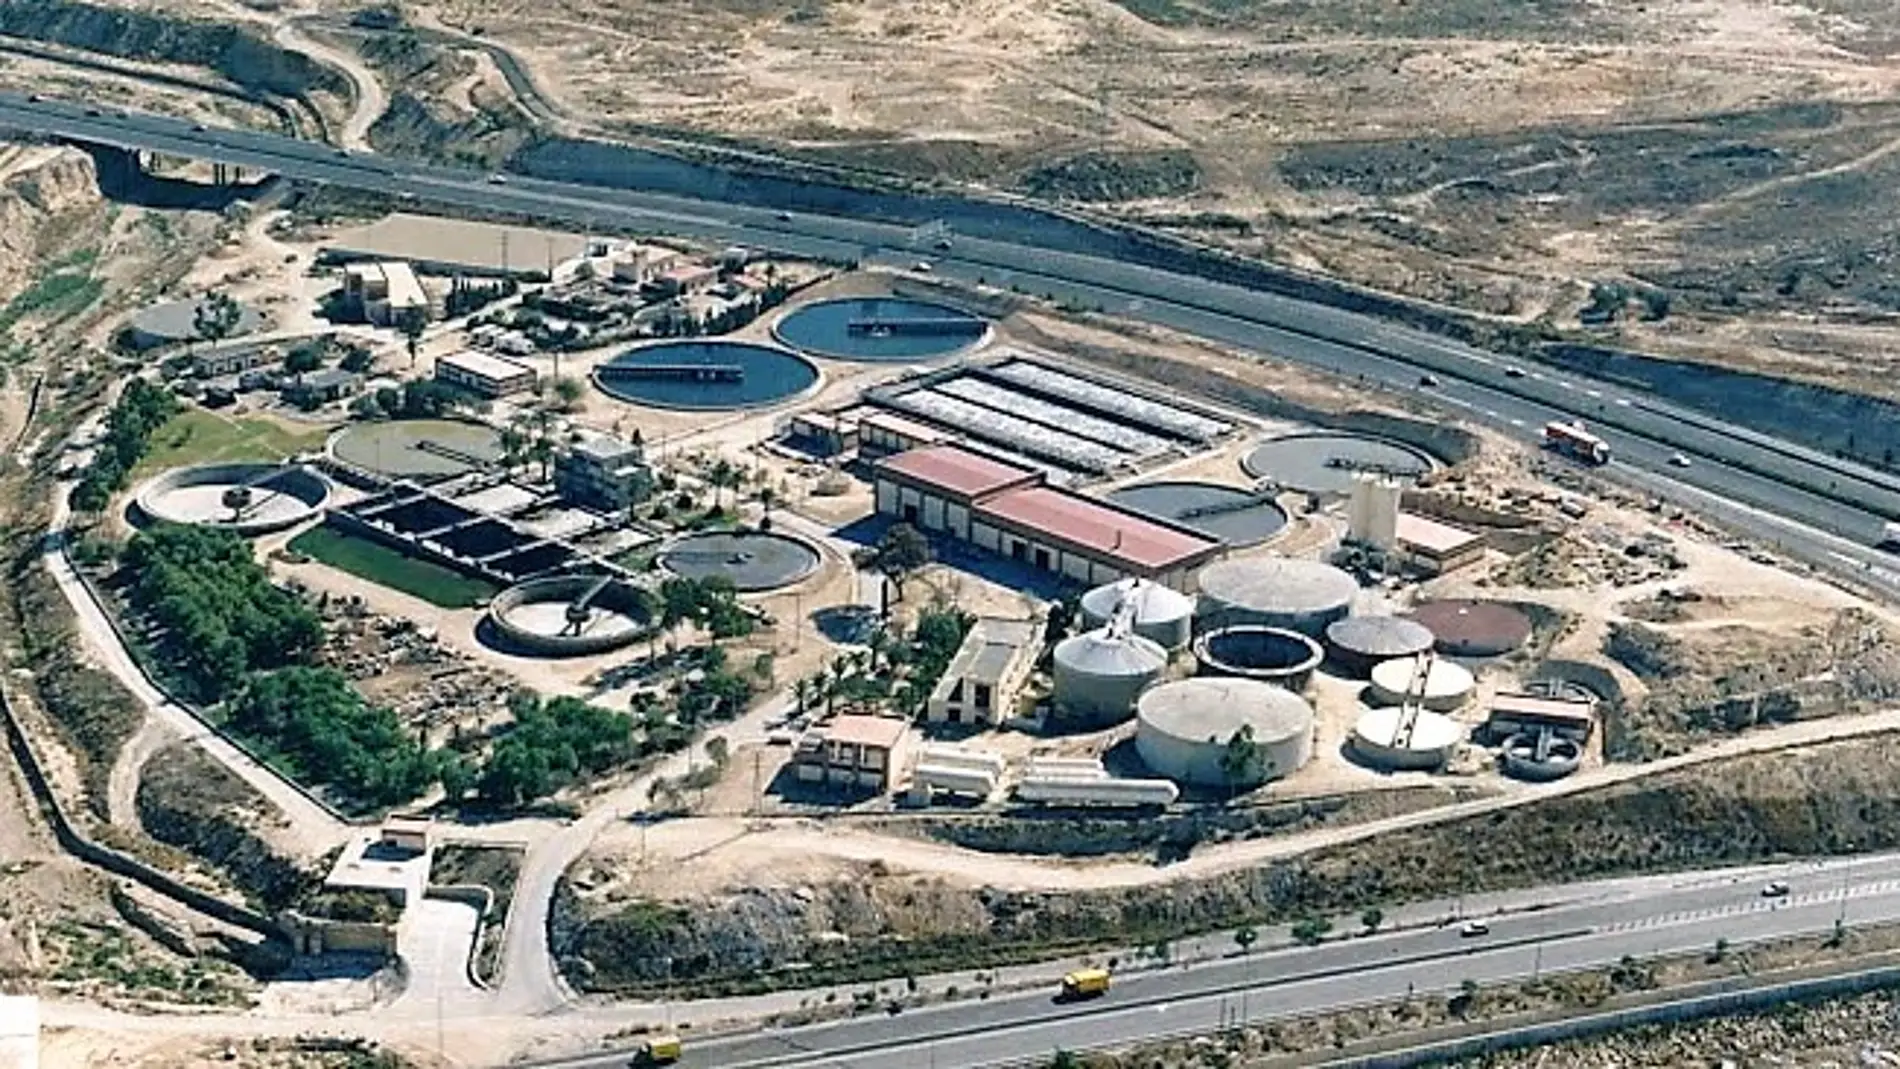 Vista de la depuradora Rincón de León de Alicante.